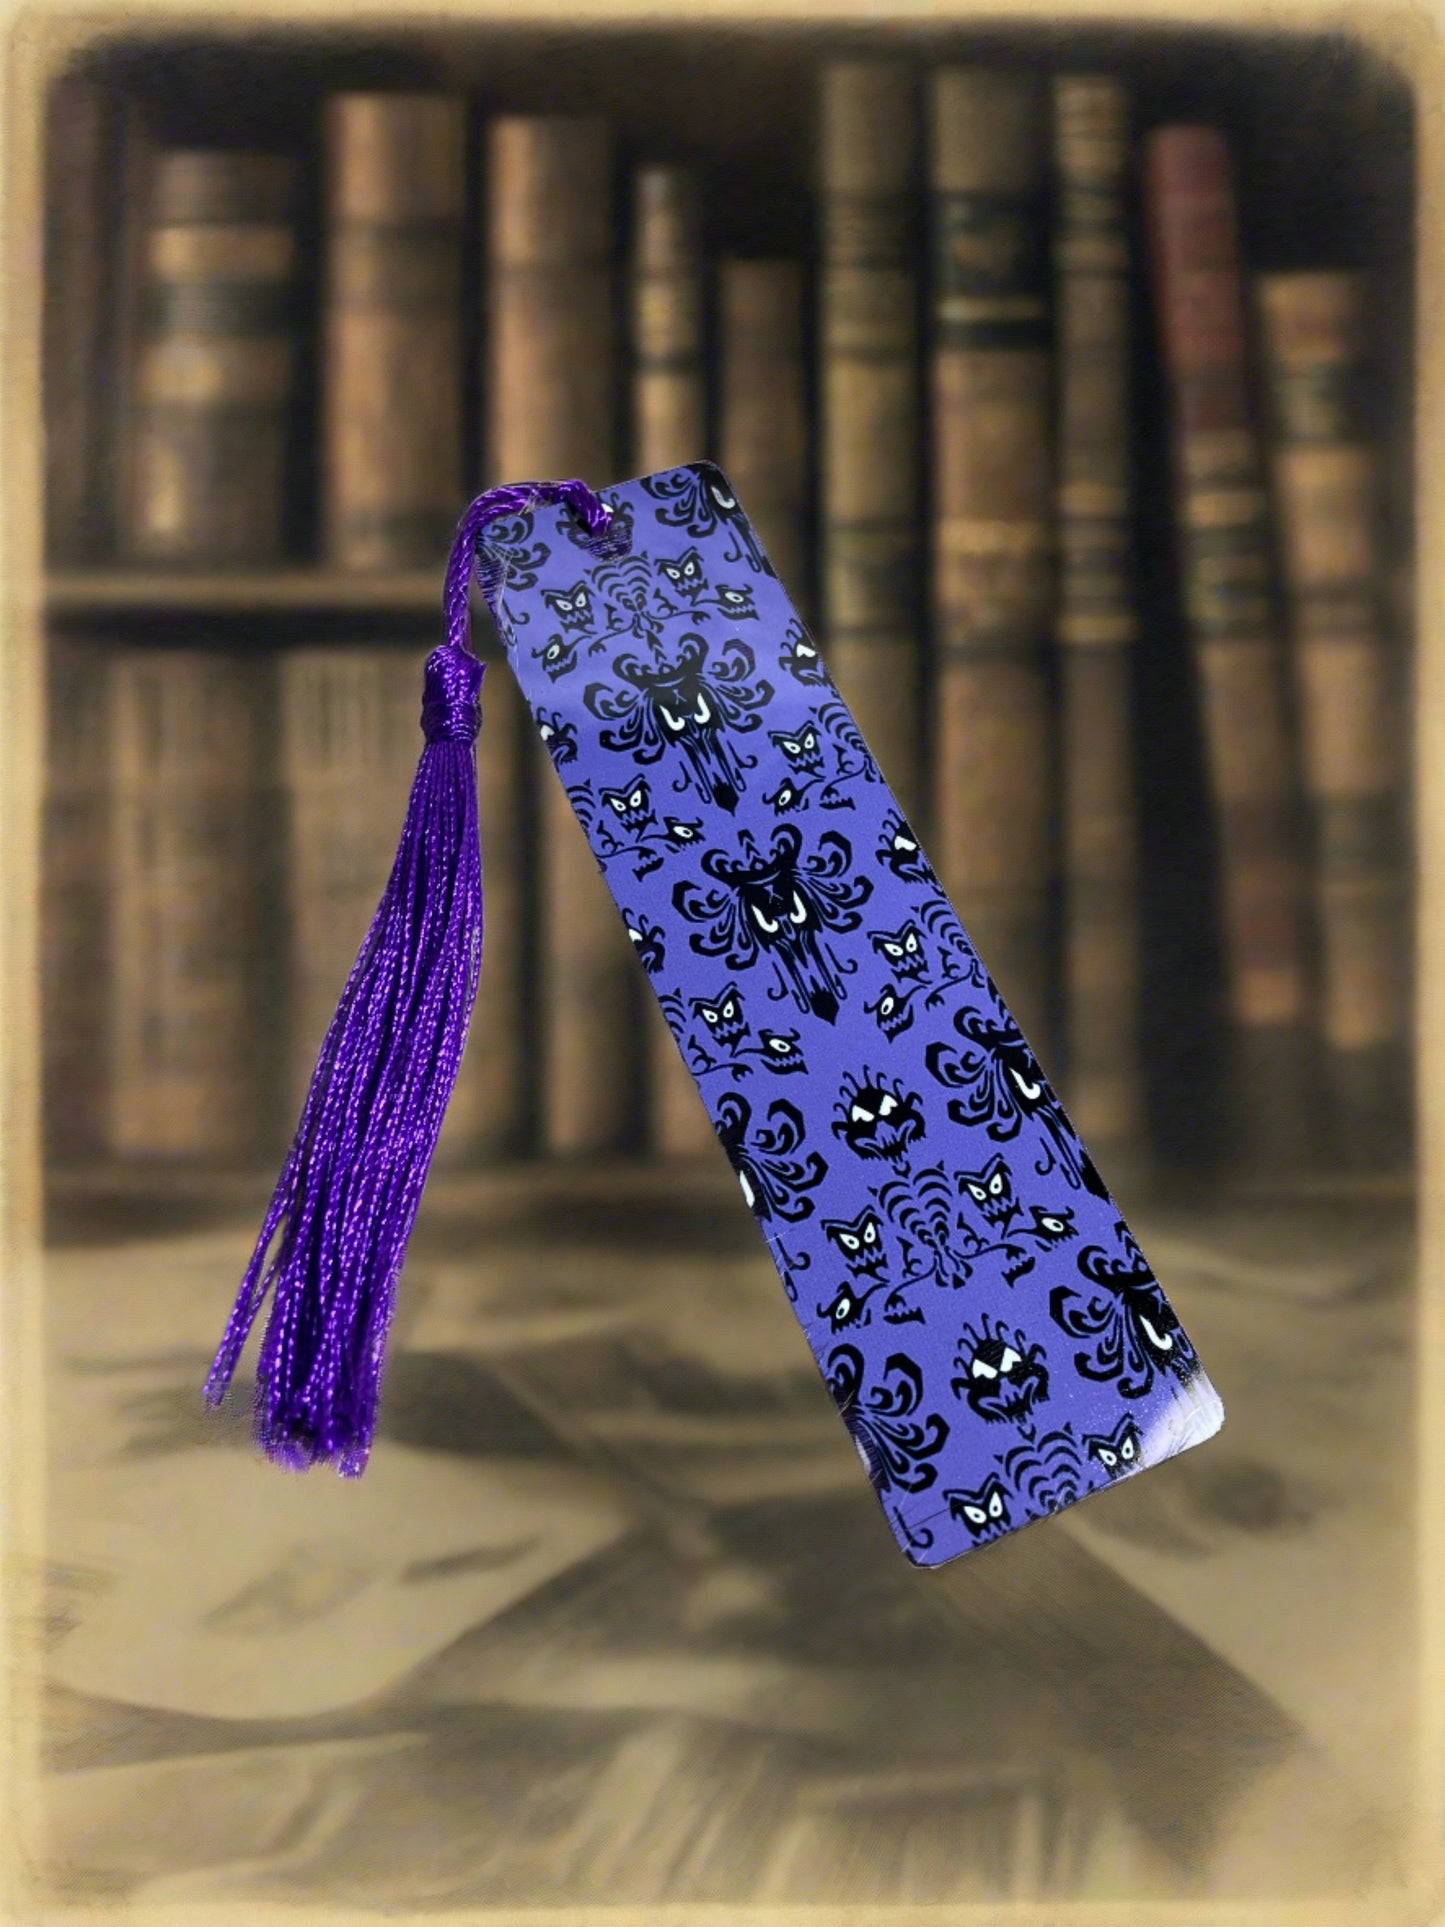 Haunted bookmark